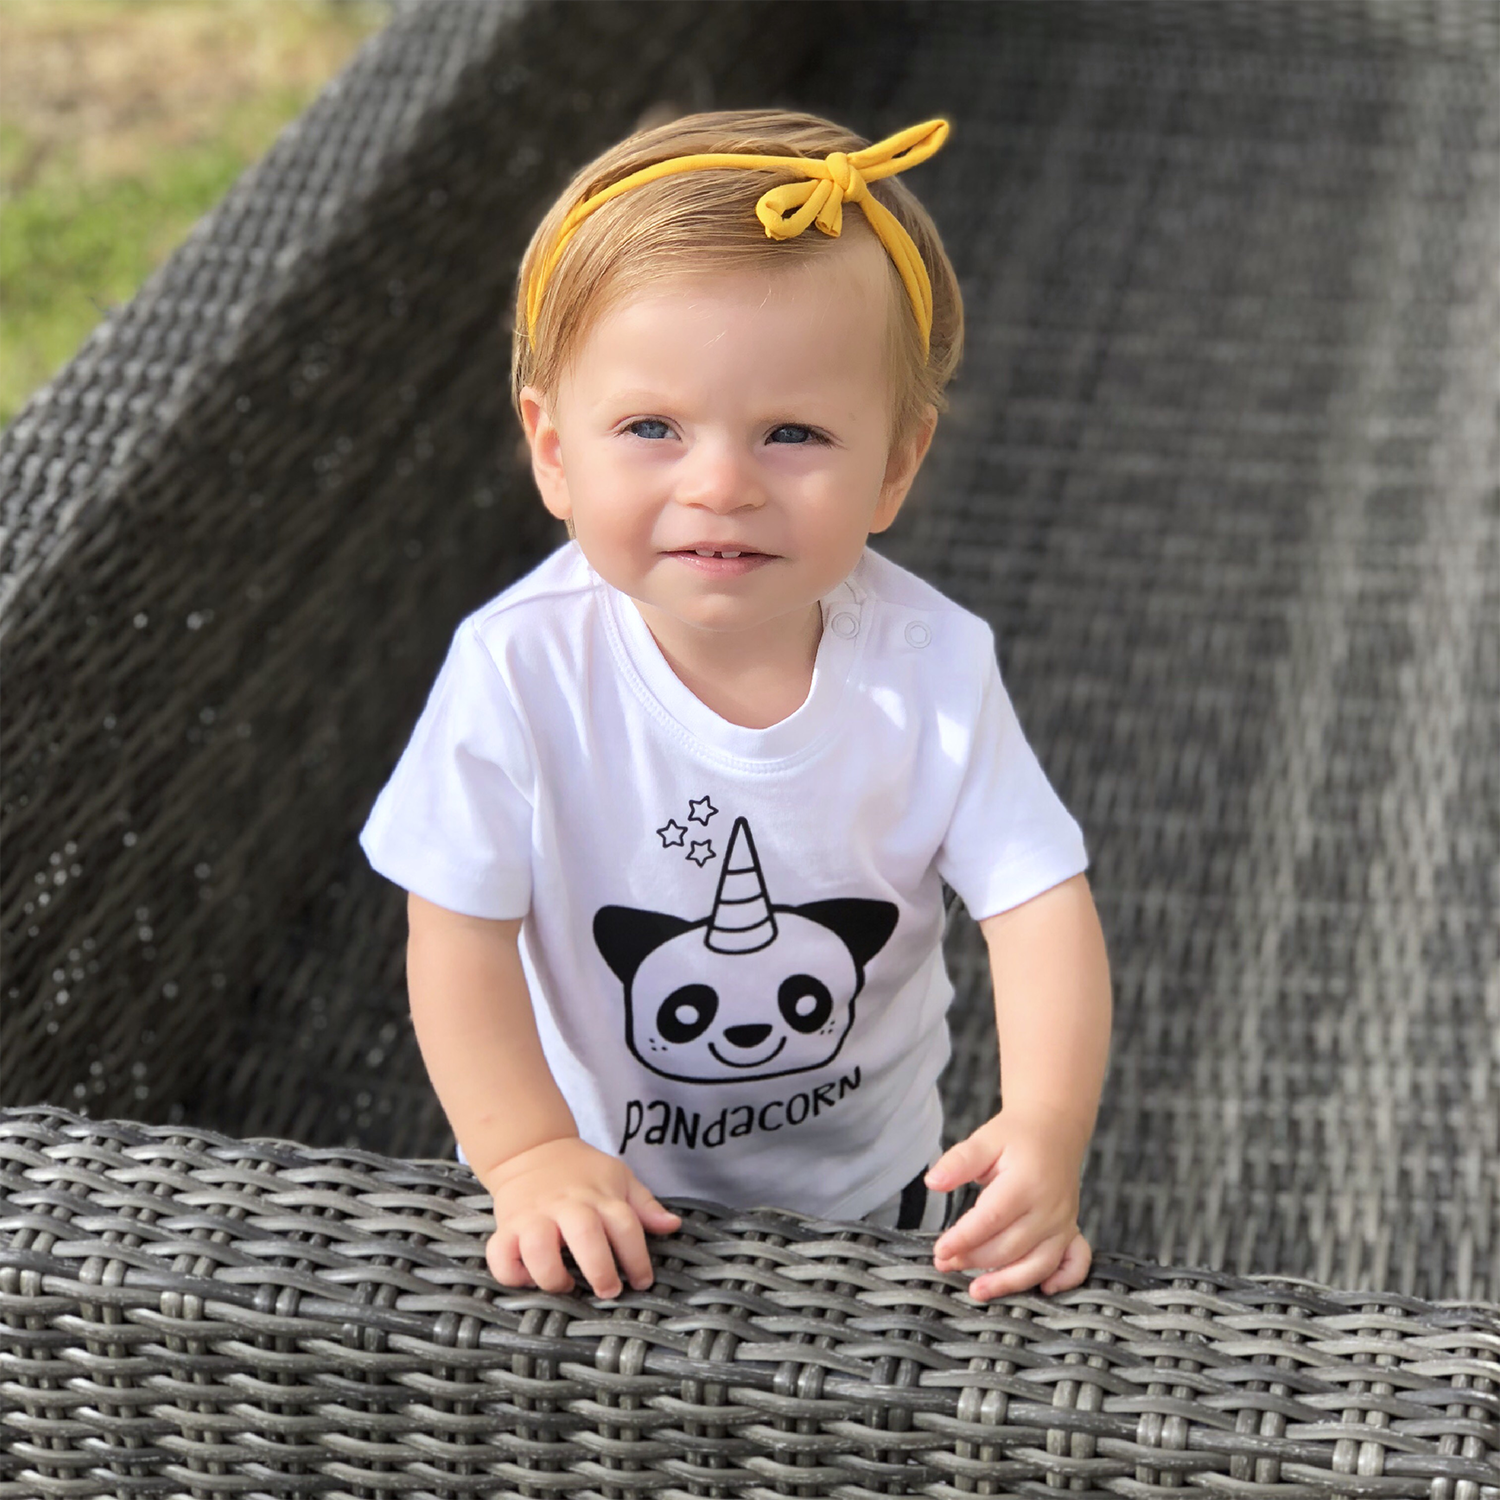 Pandacorn baby shortsleeve shirt